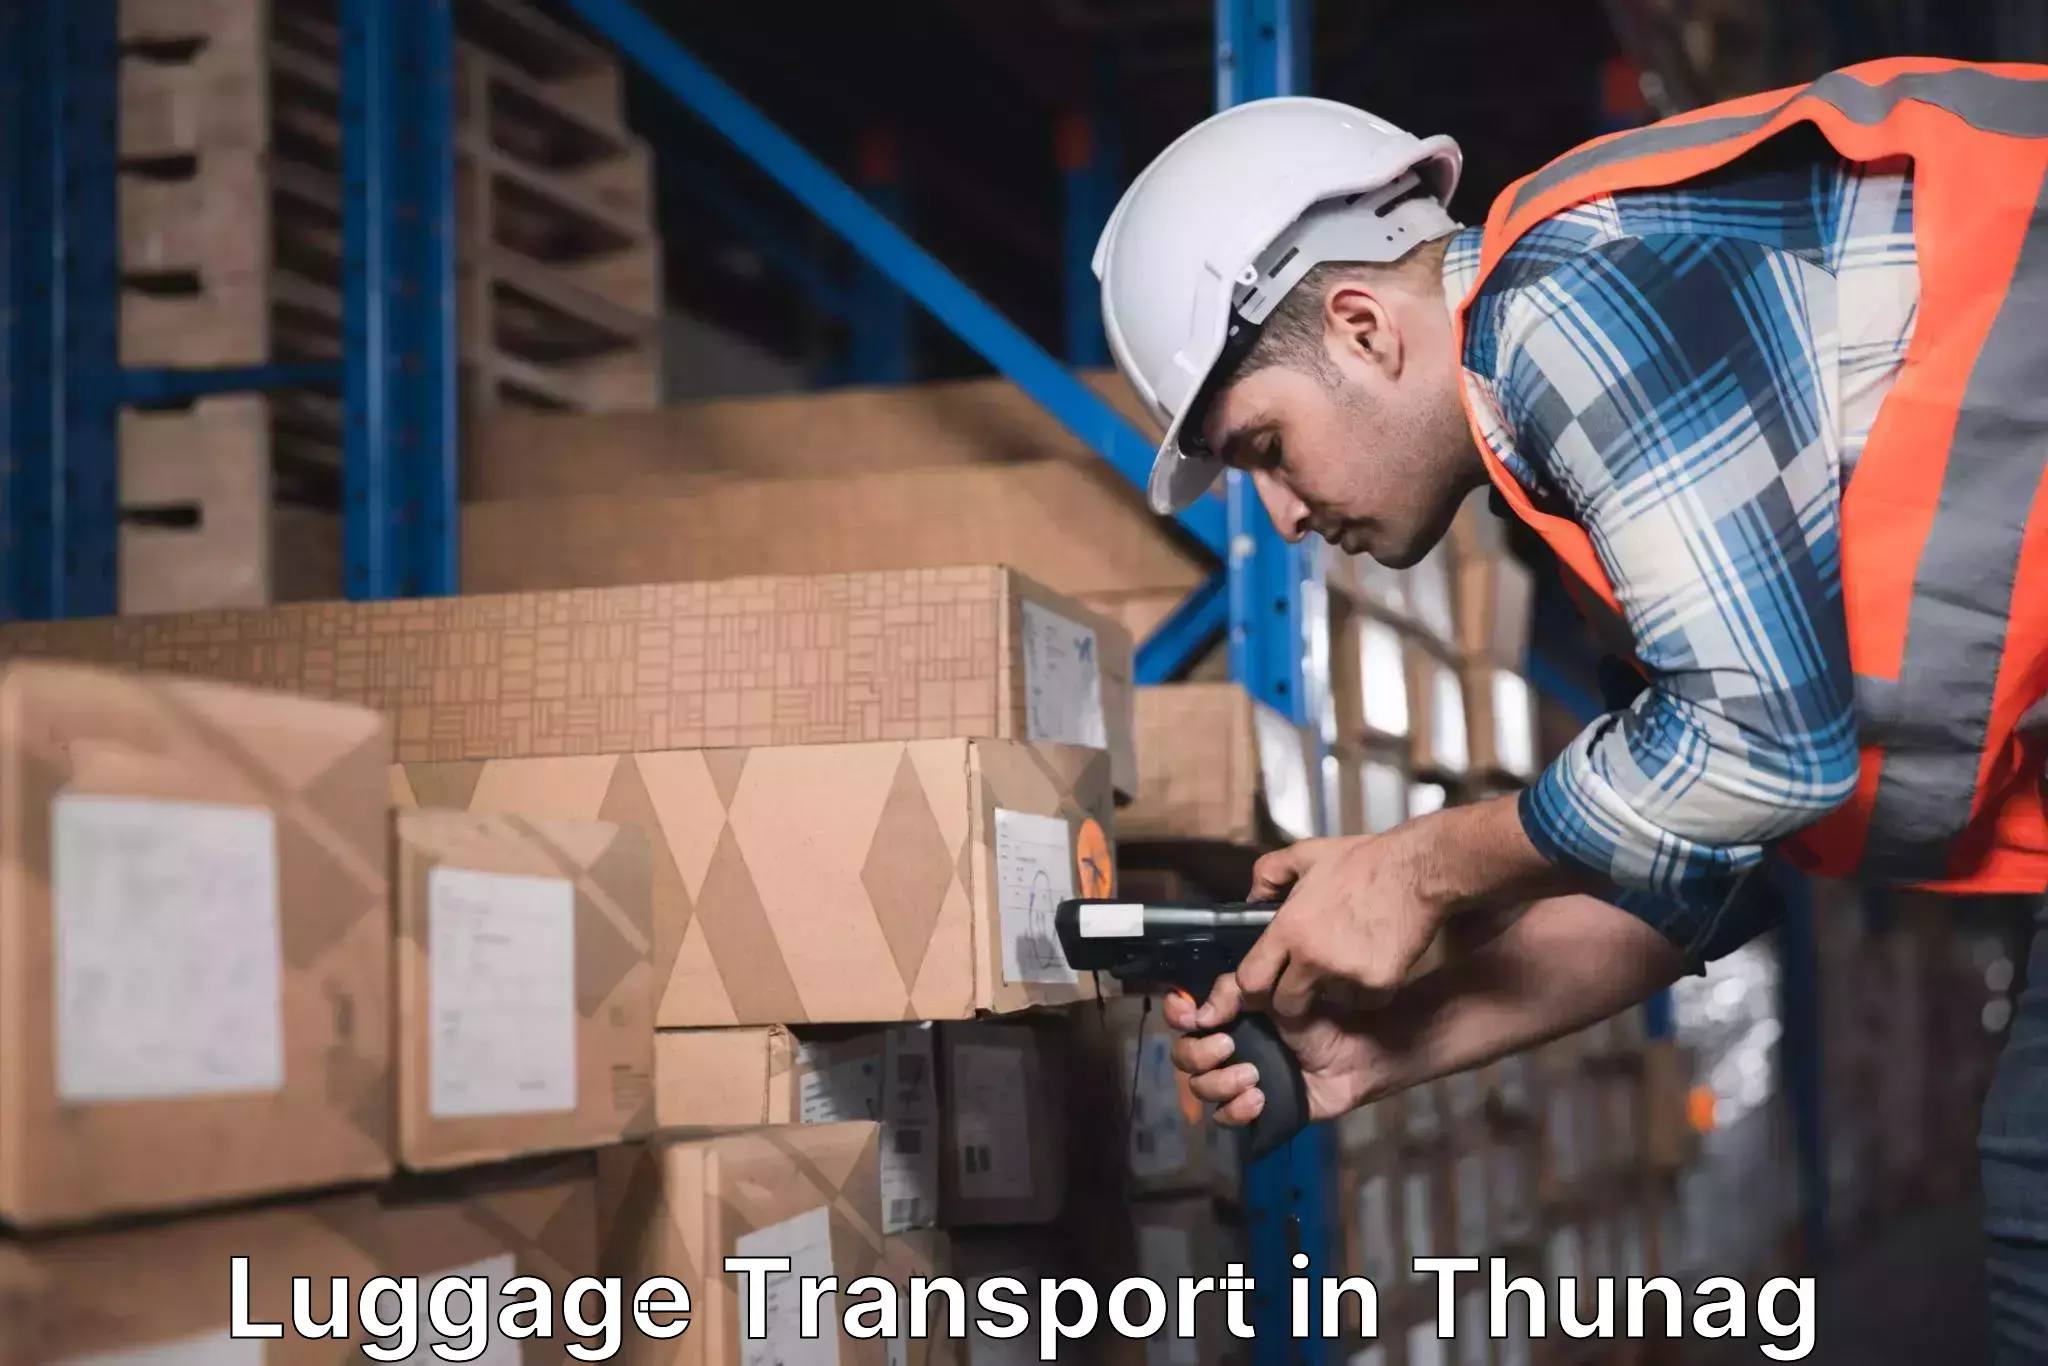 Luggage shipment processing in Thunag